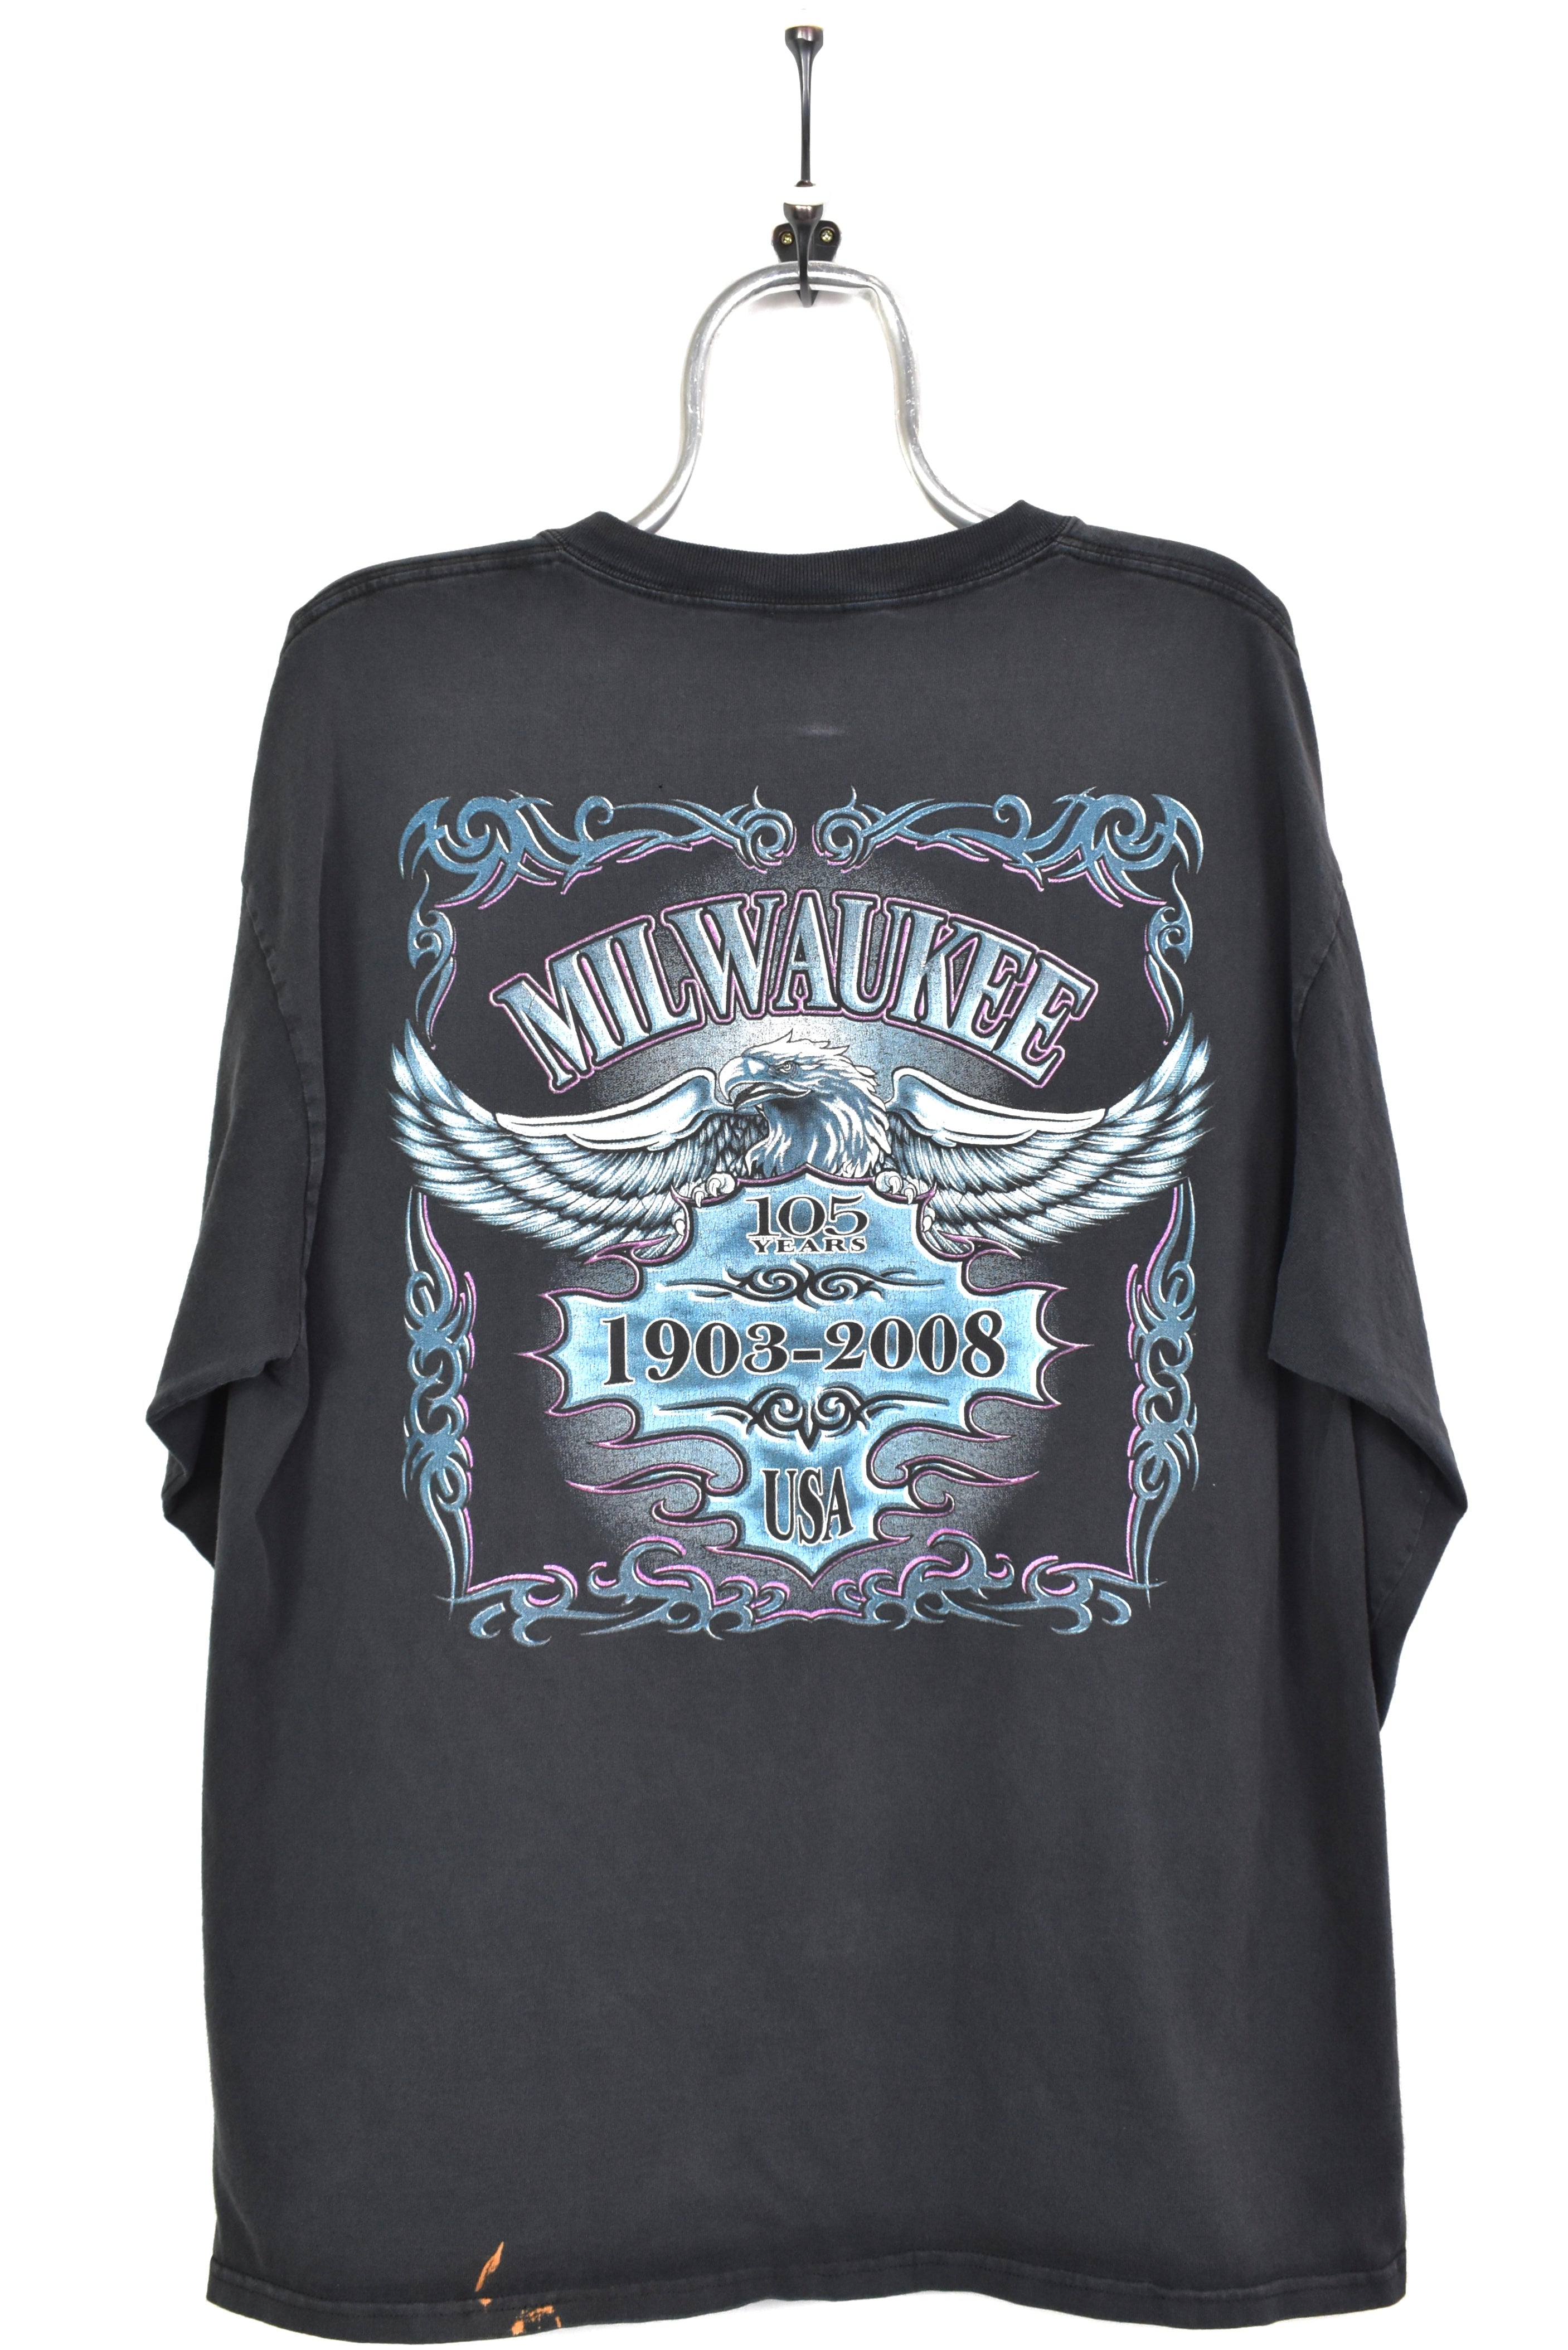 Vintage motorcycle shirt , long sleeve graphic tee - AU L HARLEY DAVIDSON